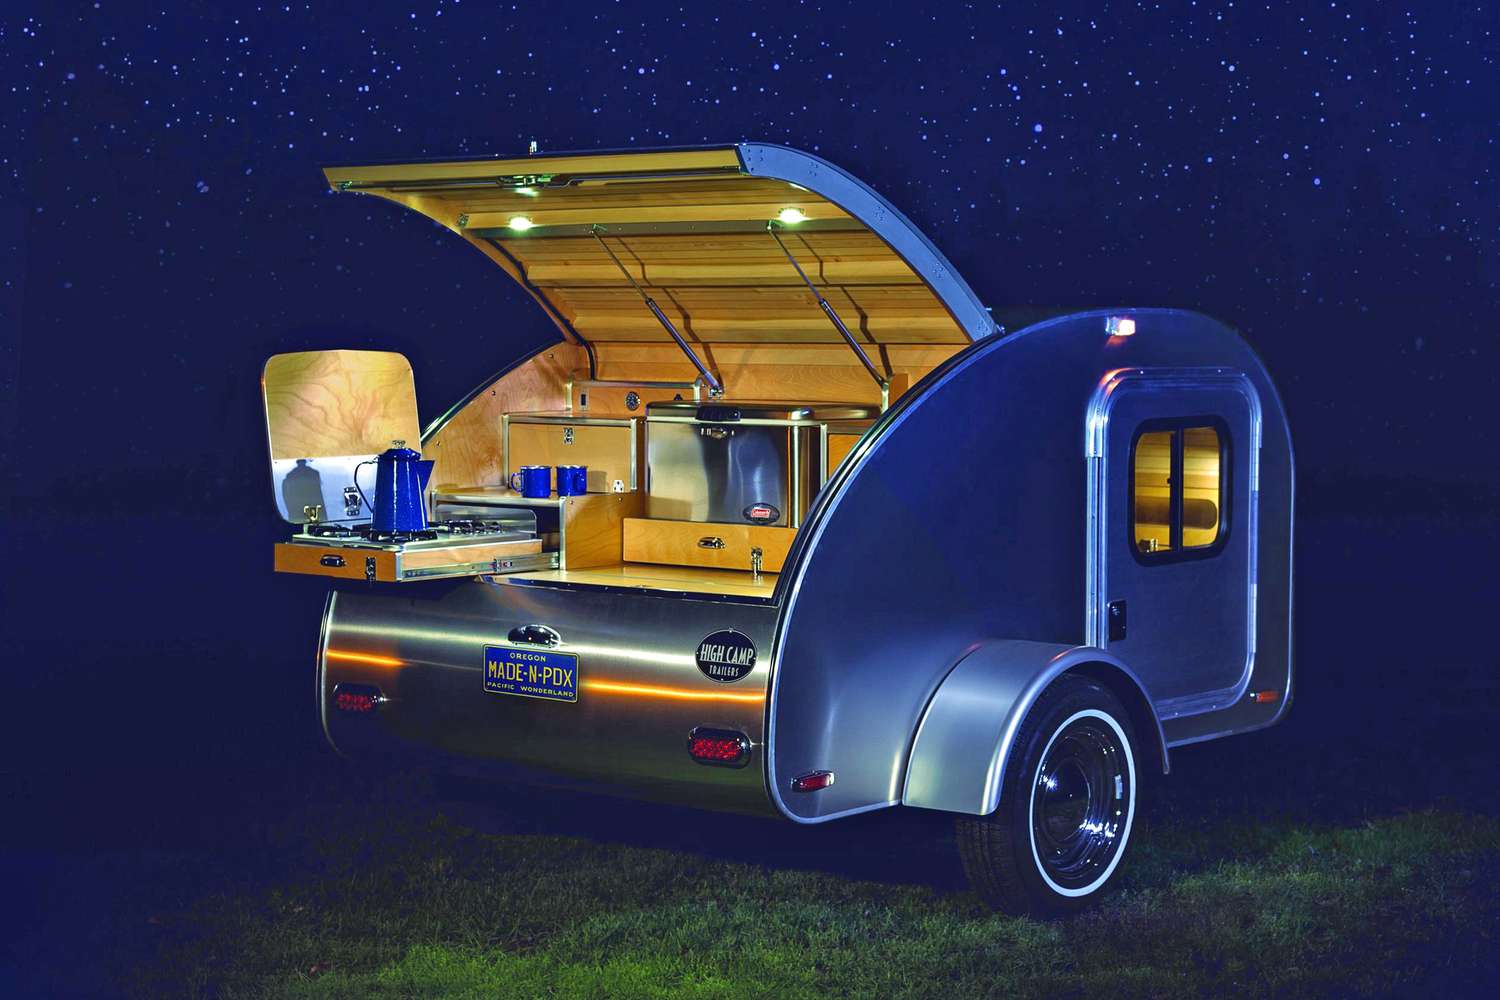 A Teardrop camper trailer